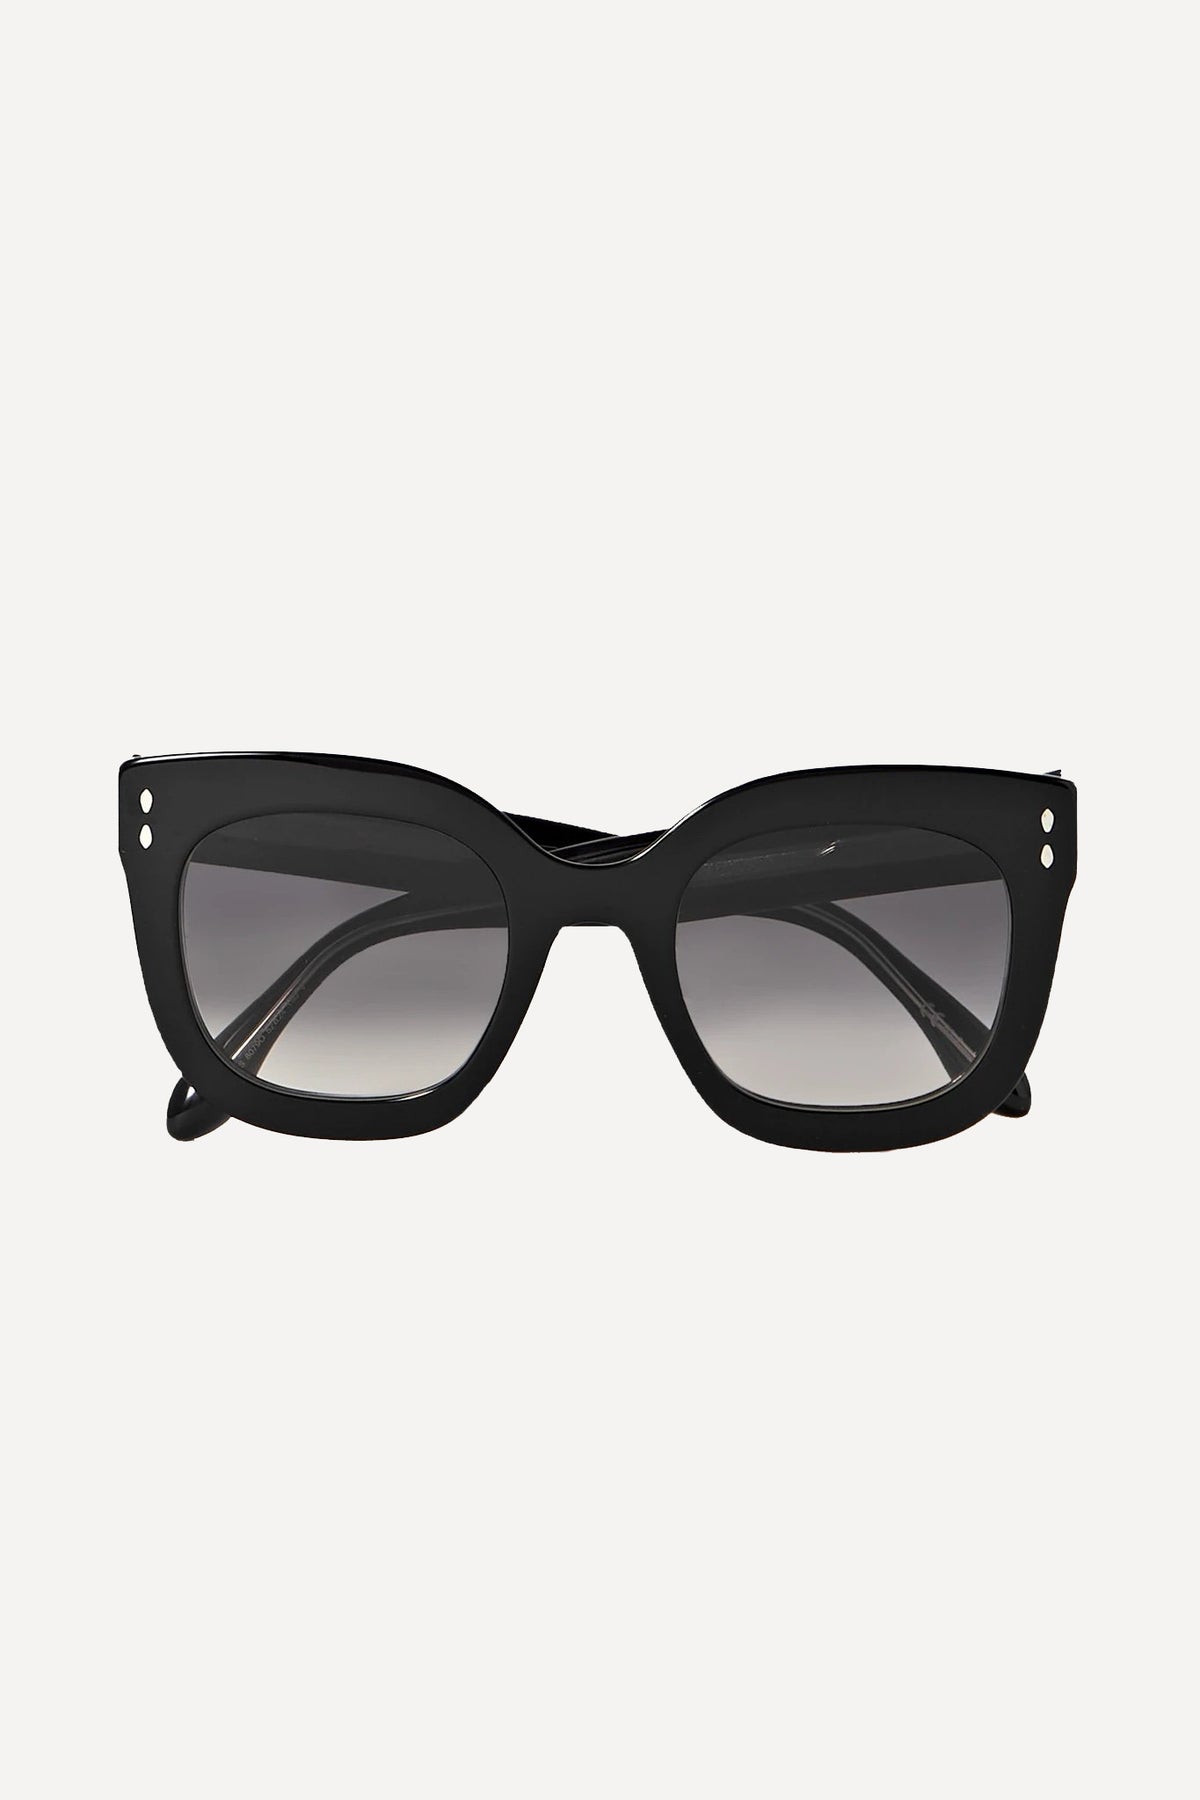 Isabel Marant Sophy Sunglasses